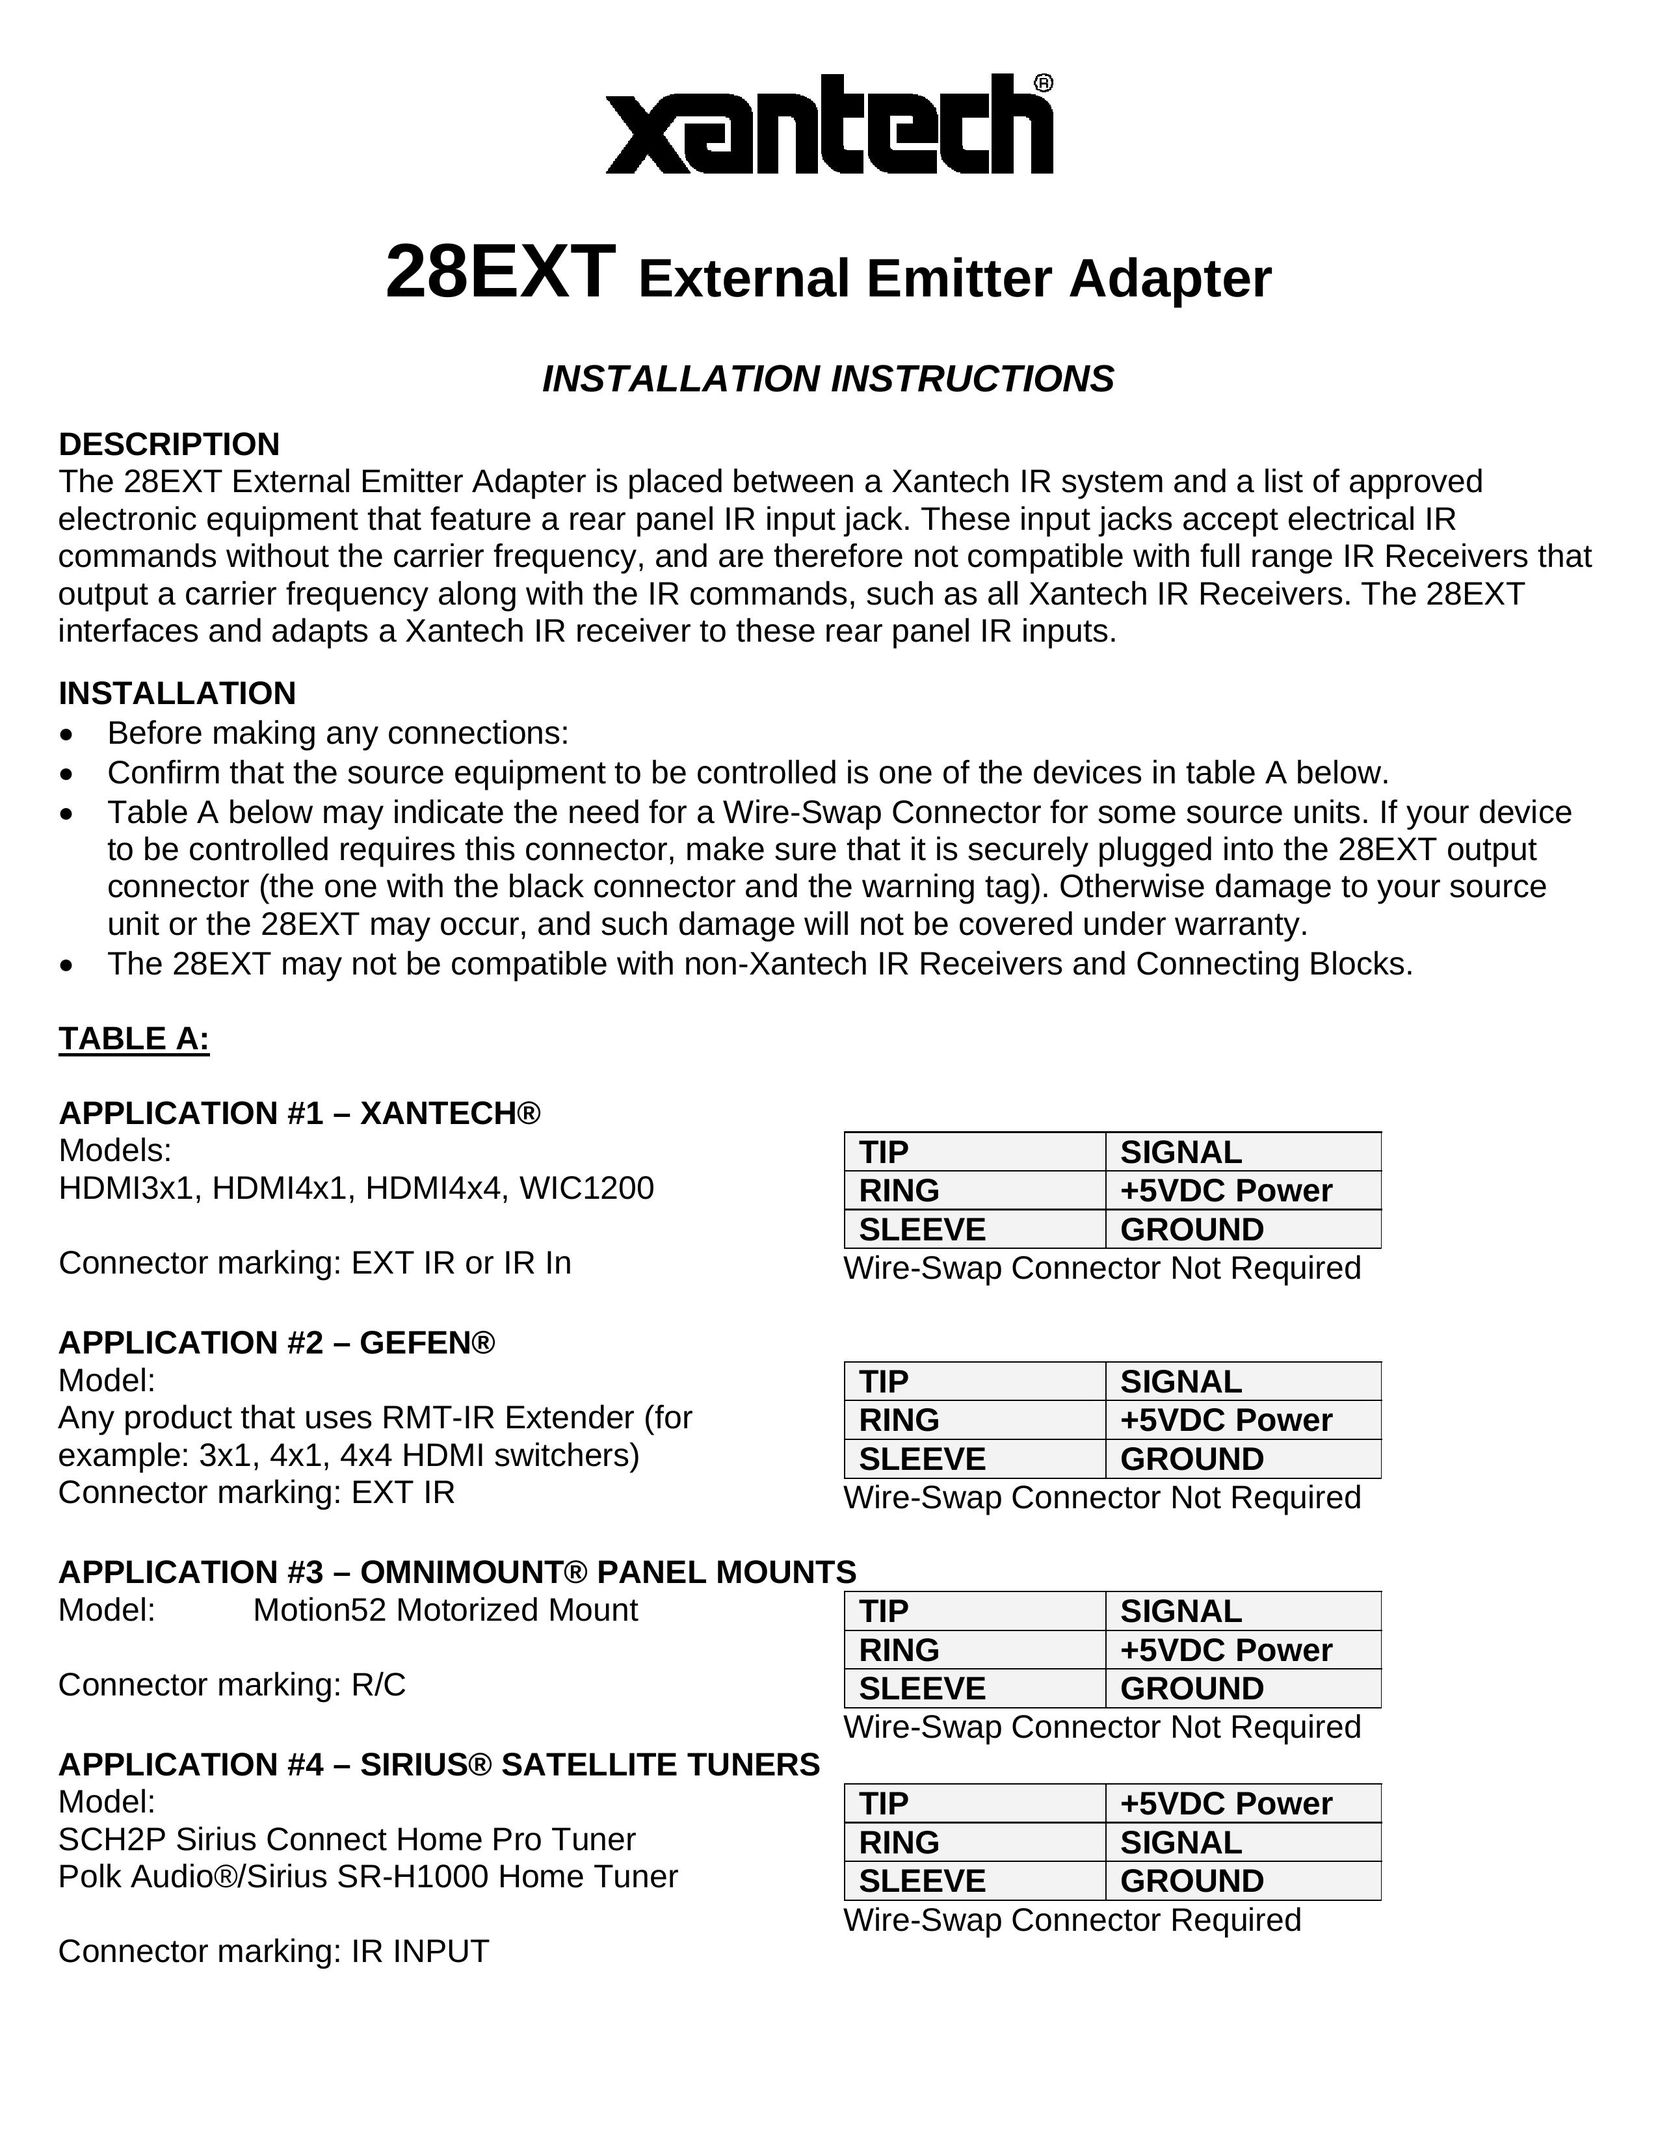 Xantech 28EXT Universal Remote User Manual